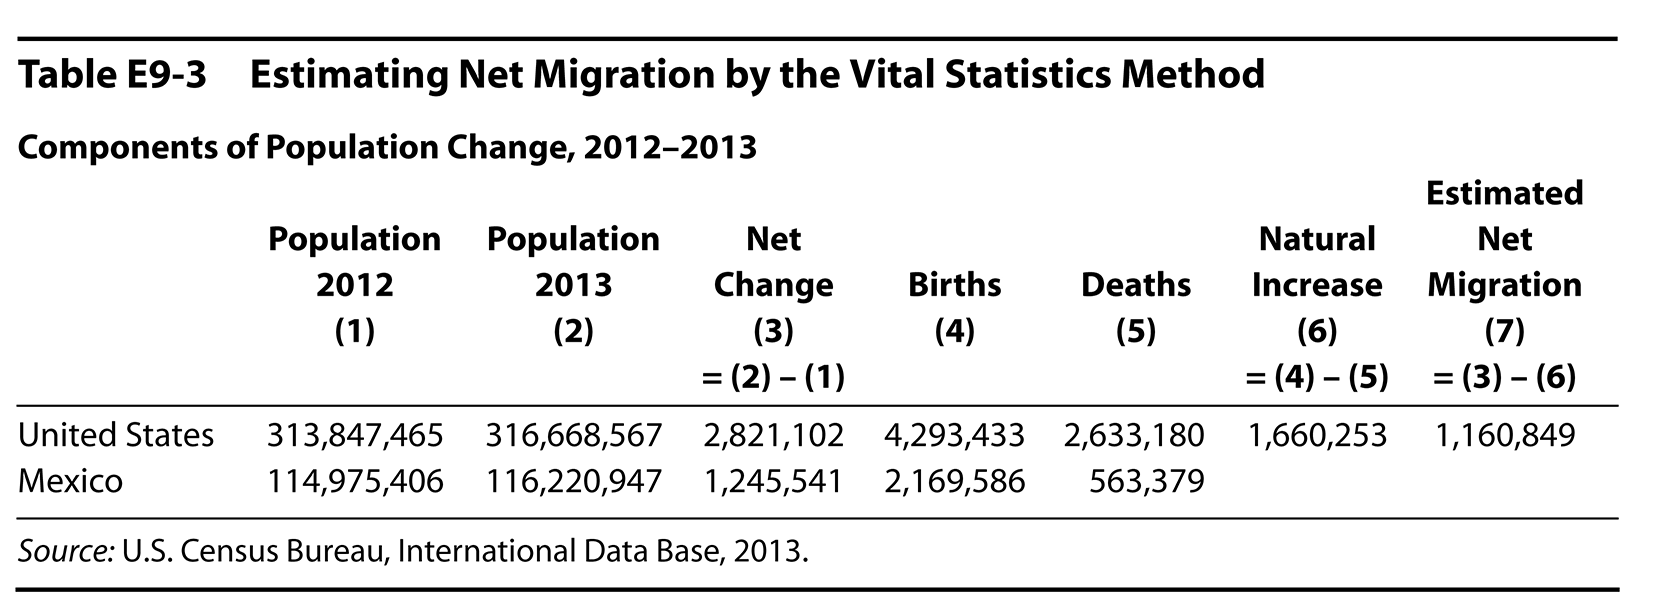 Table E9-3 Estimating Net Migration by the Vital Statistics Method